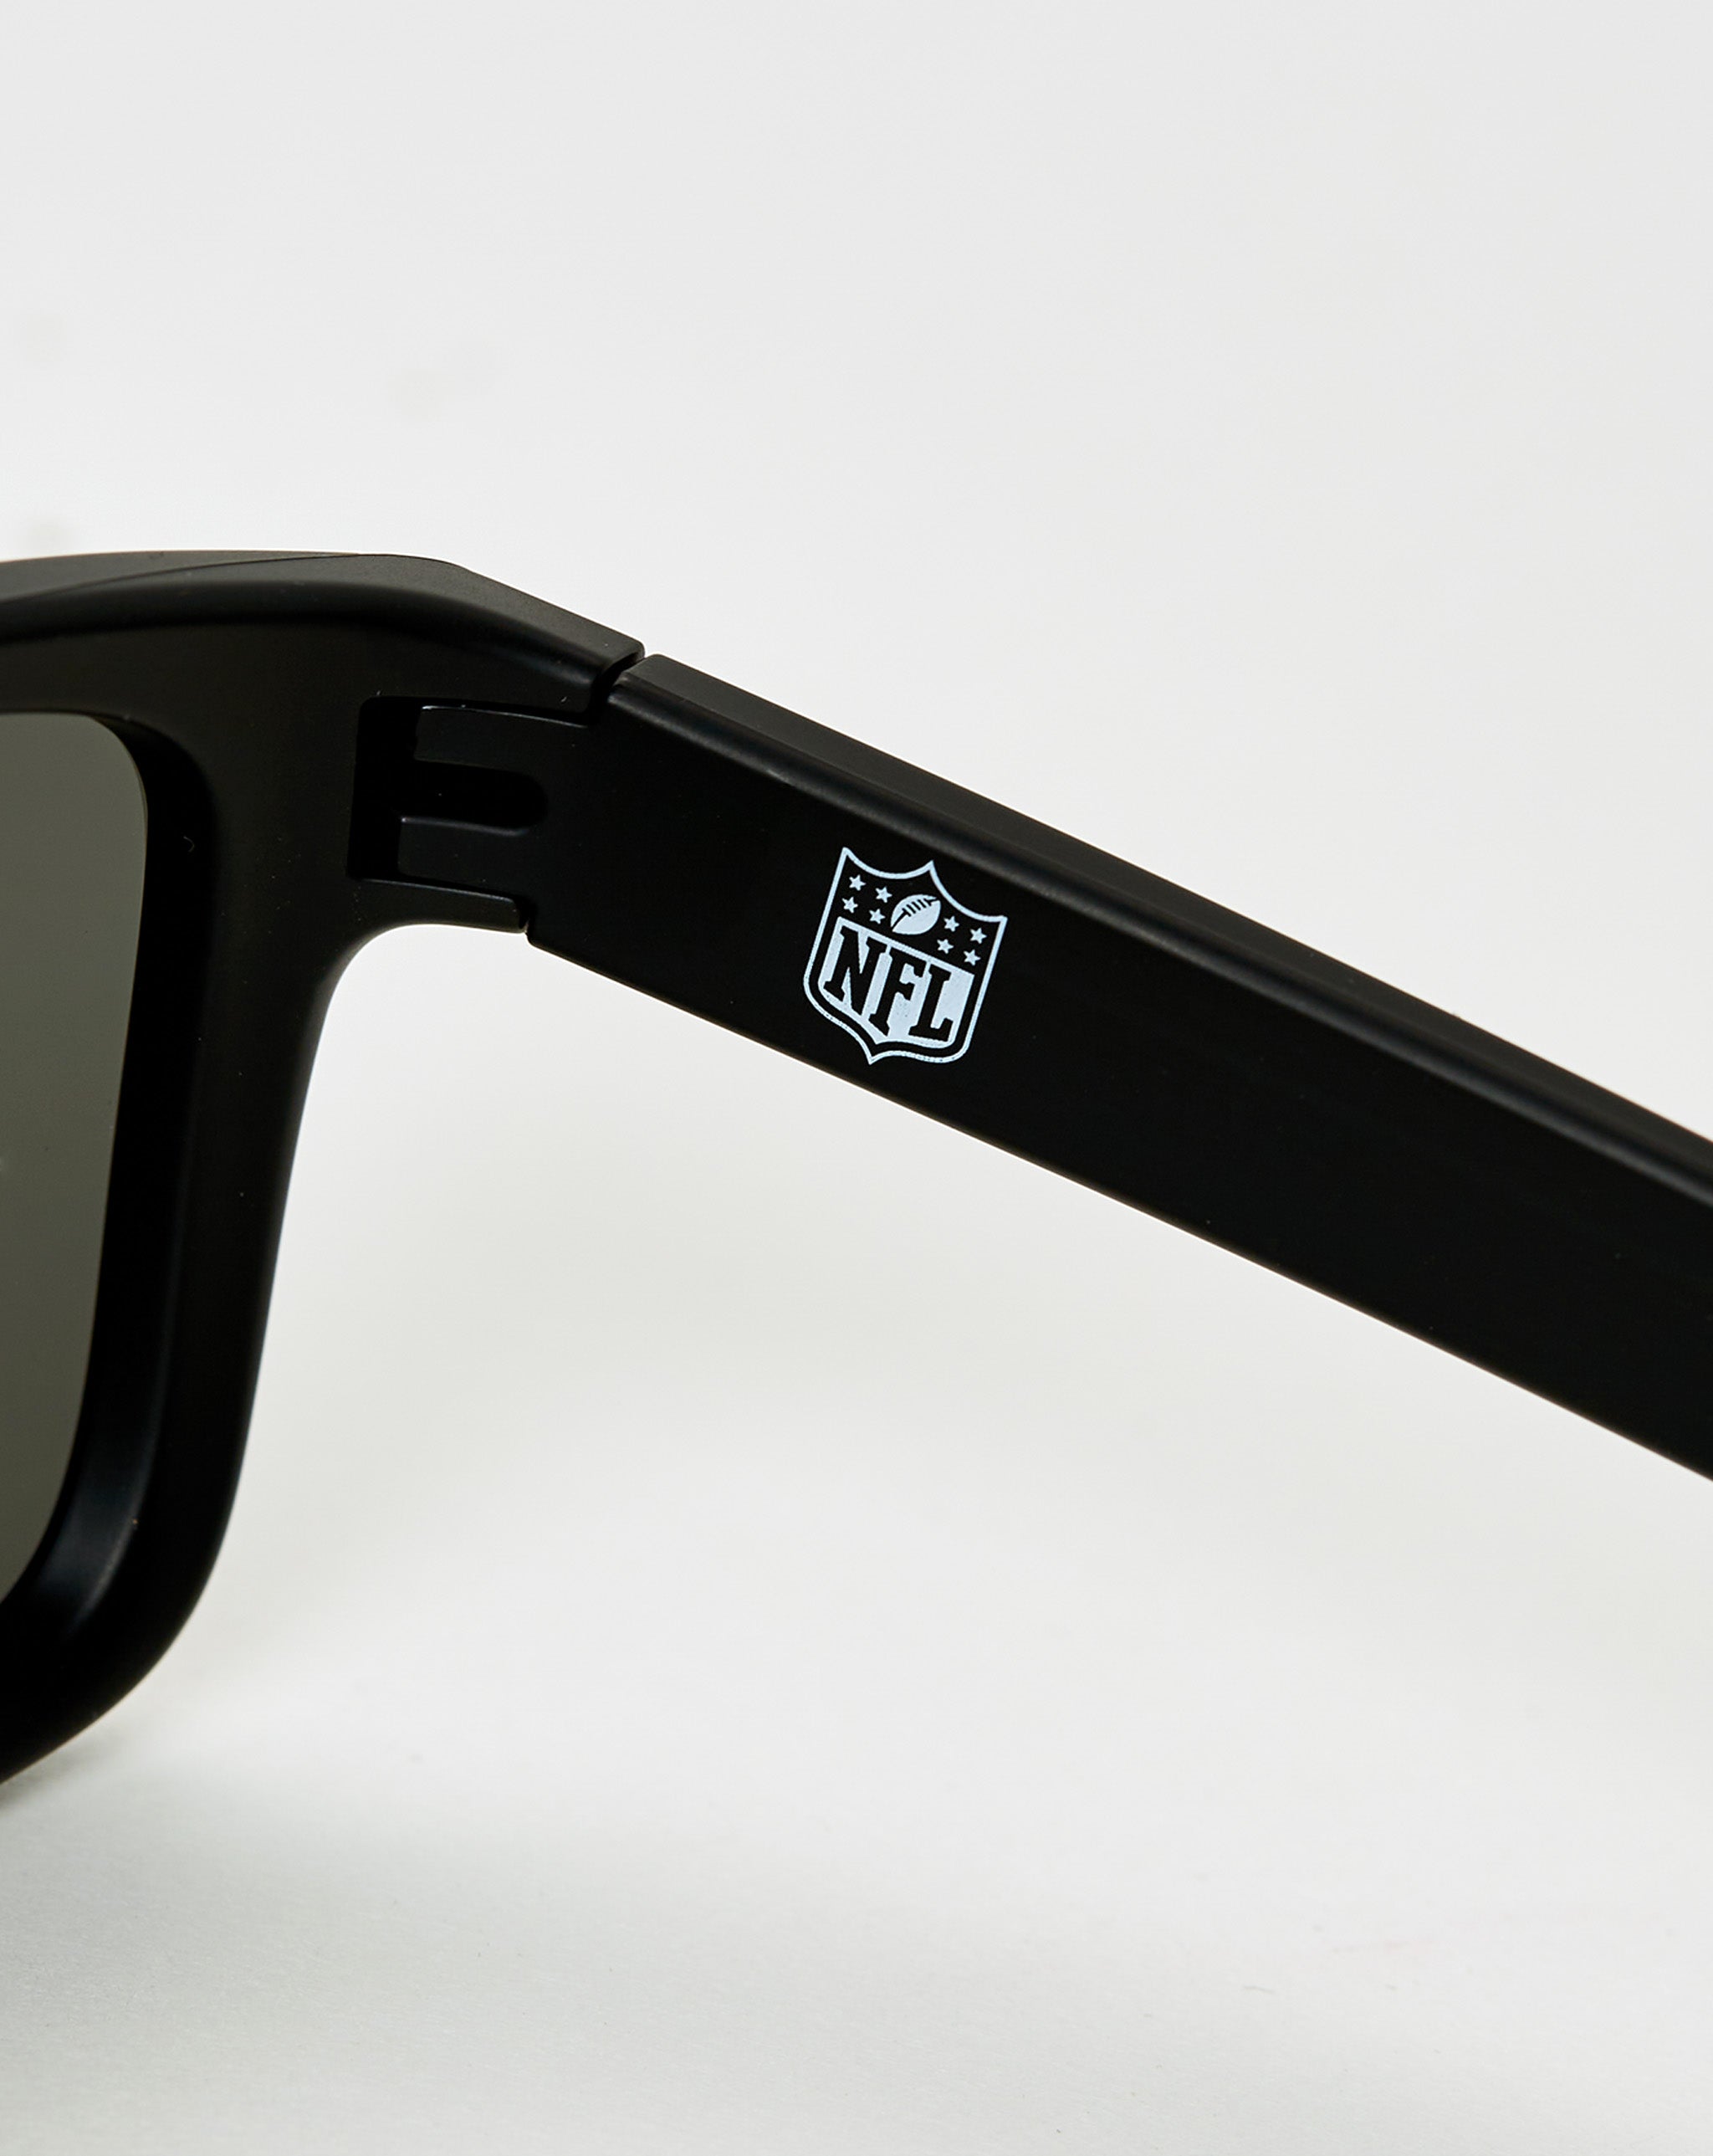 Oakley MK1027 12026G Cabo sunglasses Black Gunmetal Mirror Lens;  - Cheap Erlebniswelt-fliegenfischen Jordan outlet